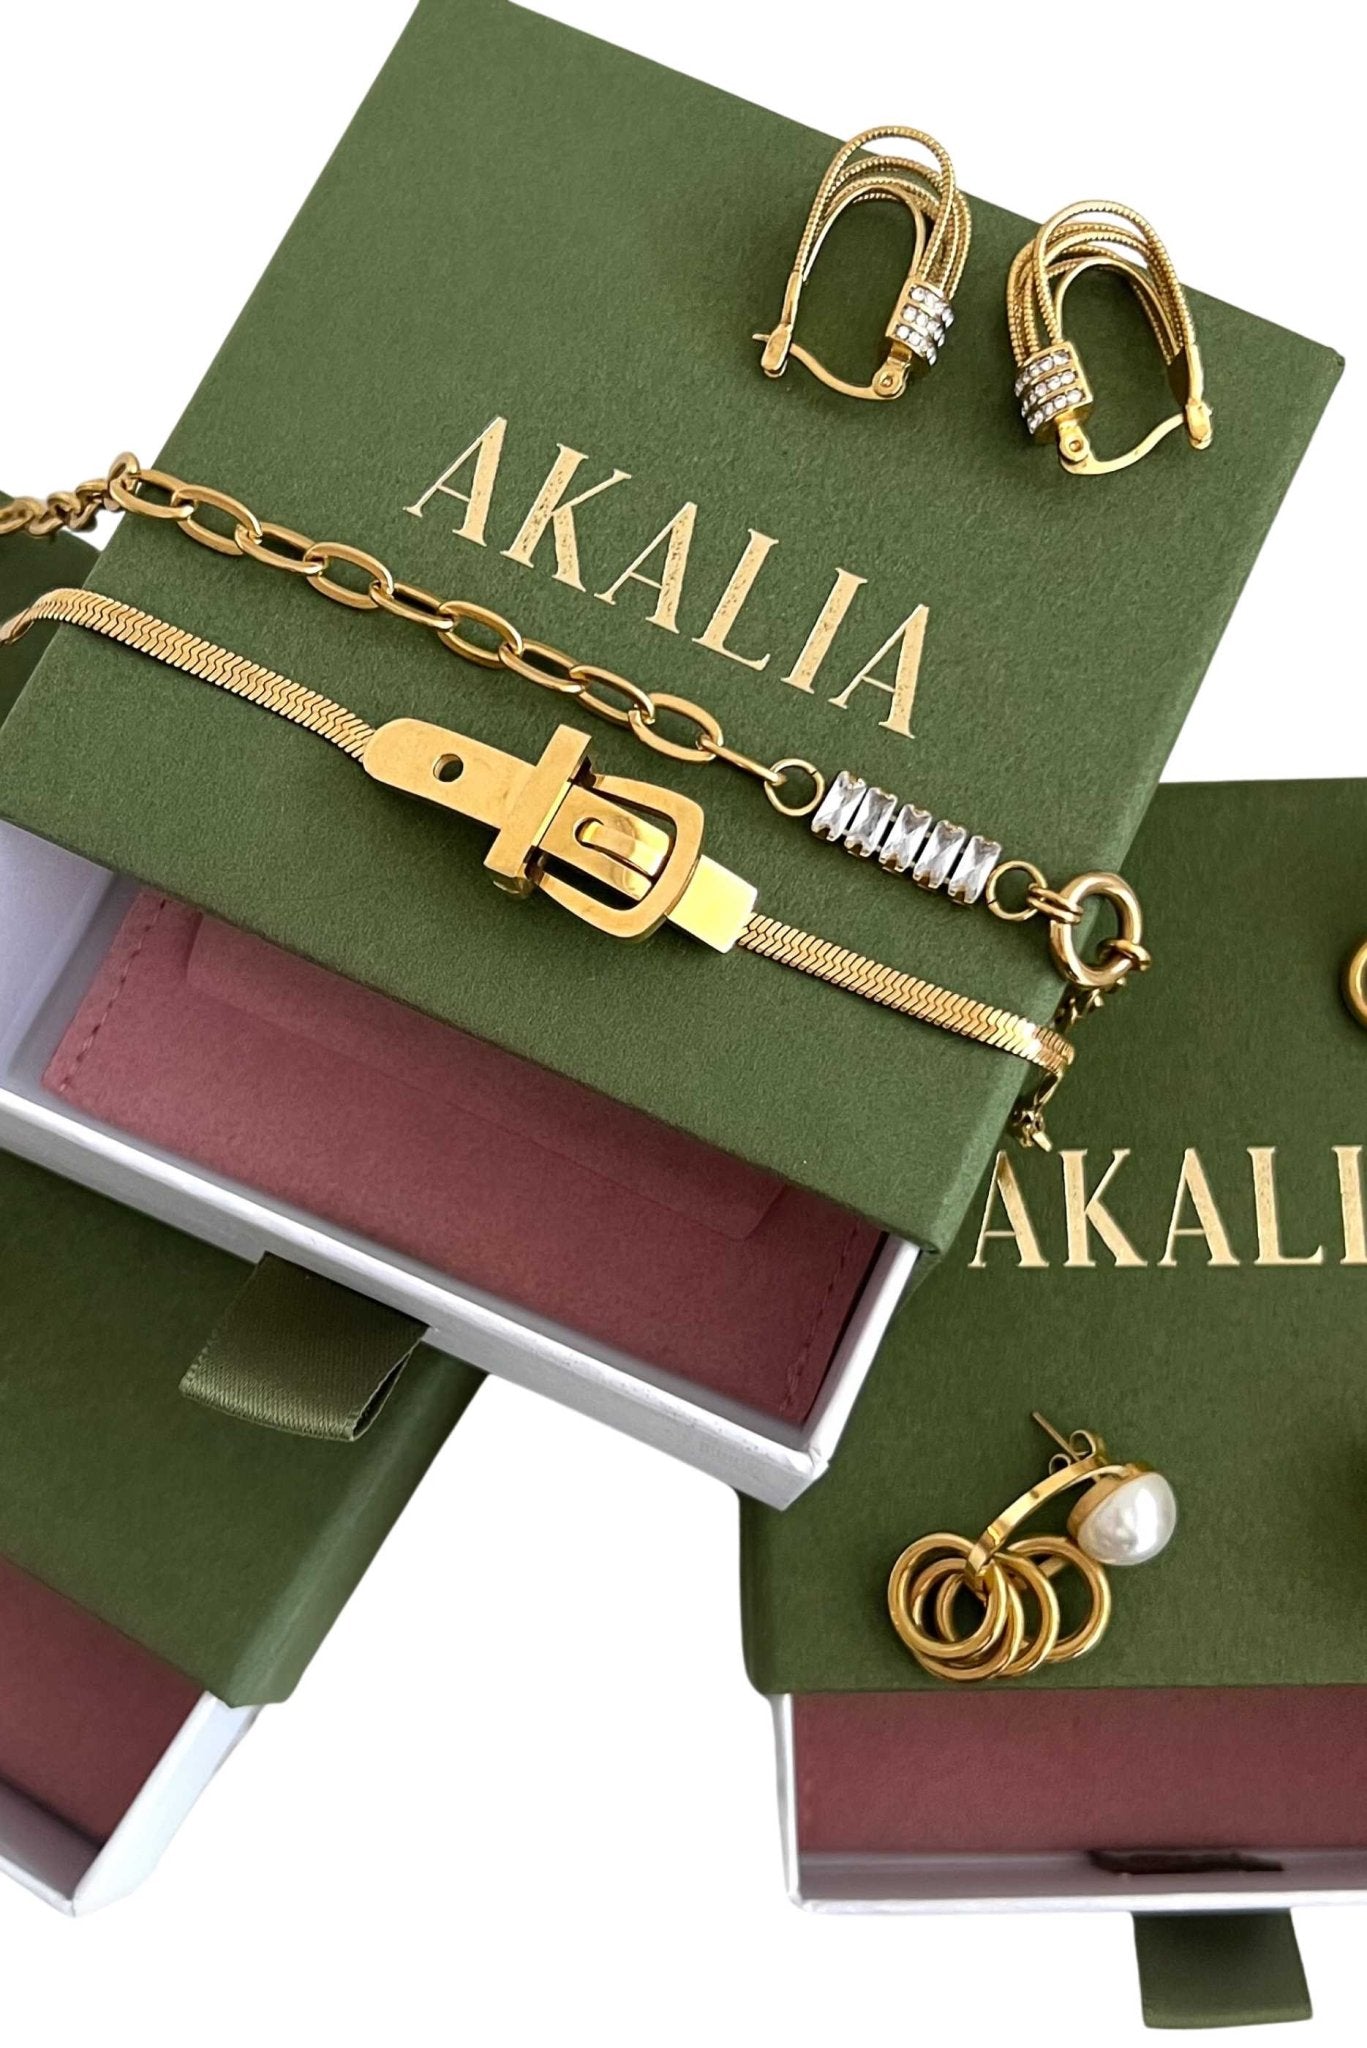 Simplicity 18K Gold Plated Bracelet - Akalia